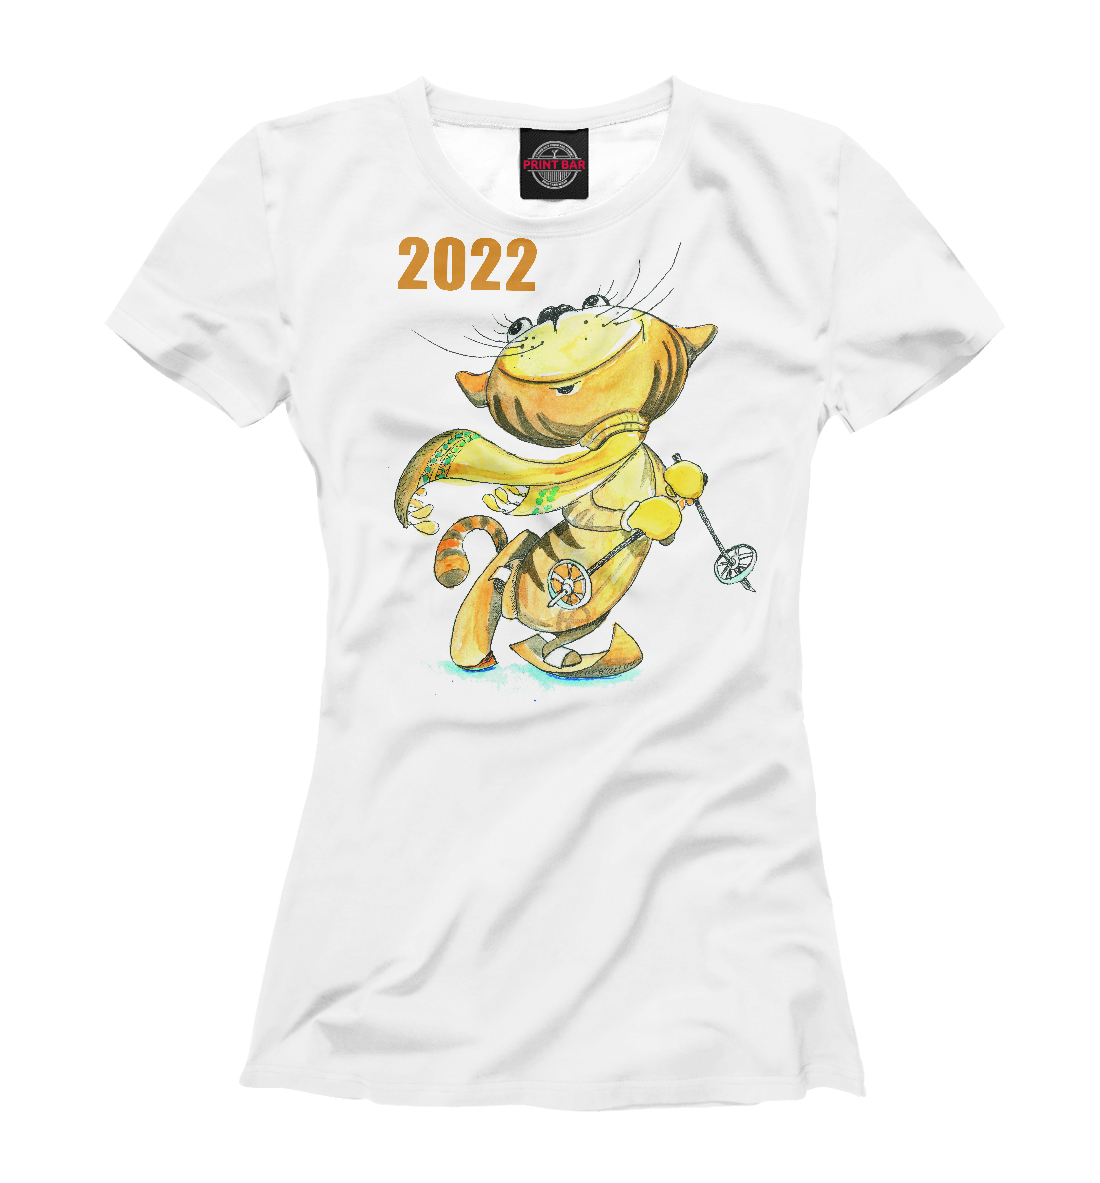 Футболка Символ года 2022 для девочек, артикул: GTG-998148-fut-1mp